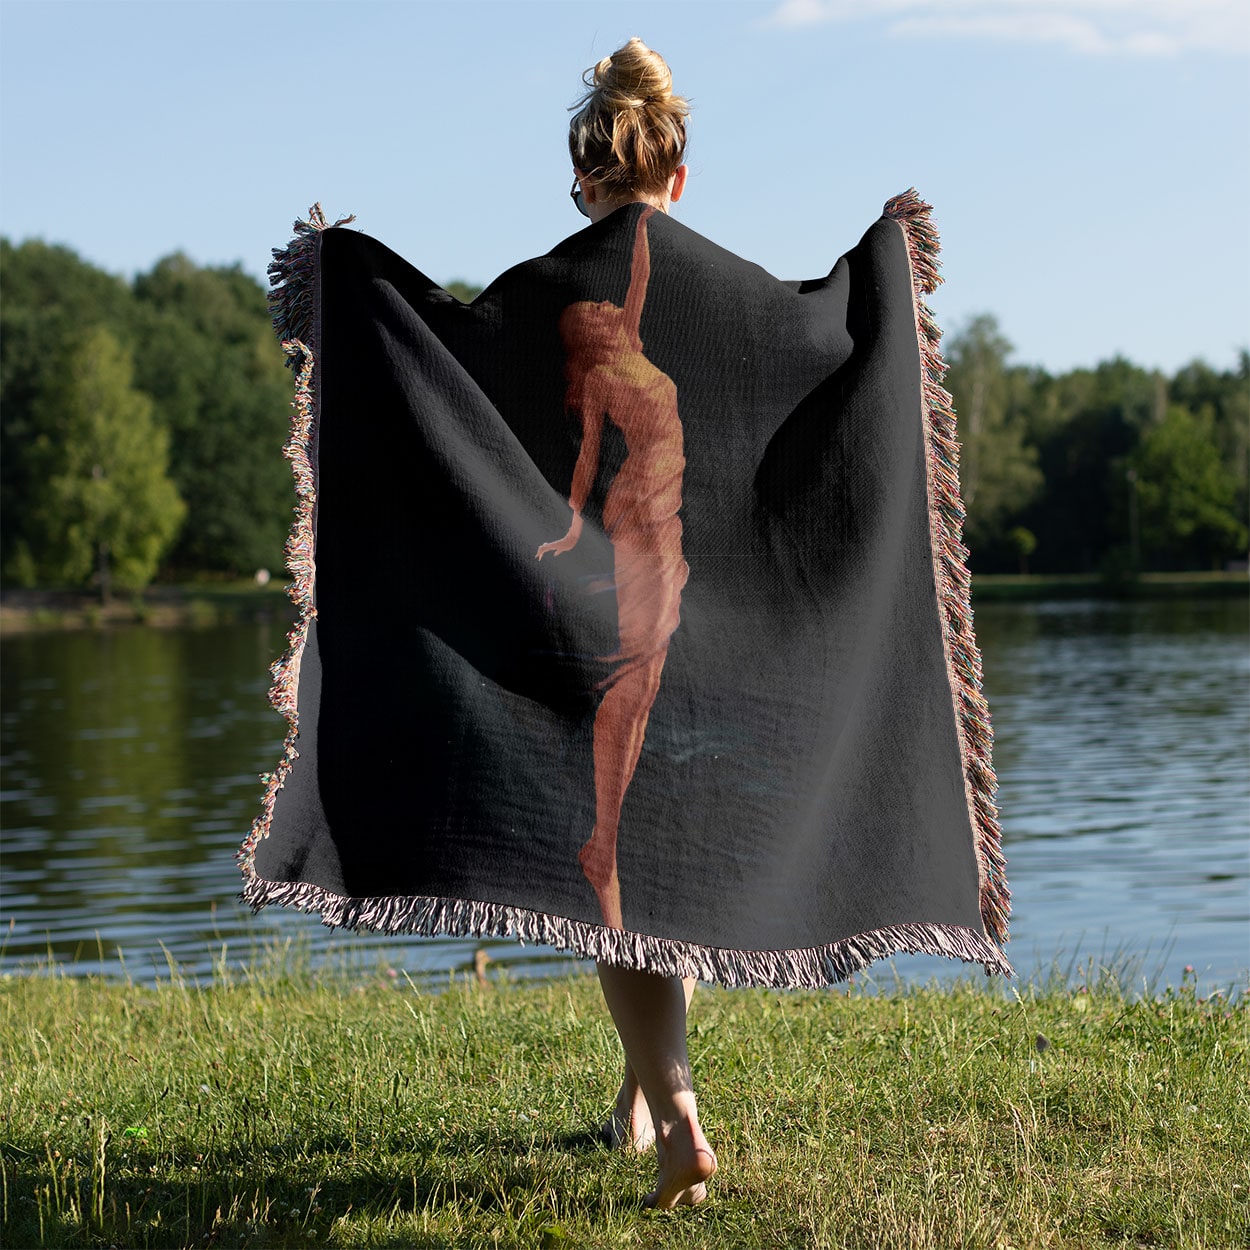 Vintage Fantasy Woven Blanket Held on a Woman's Back Outside